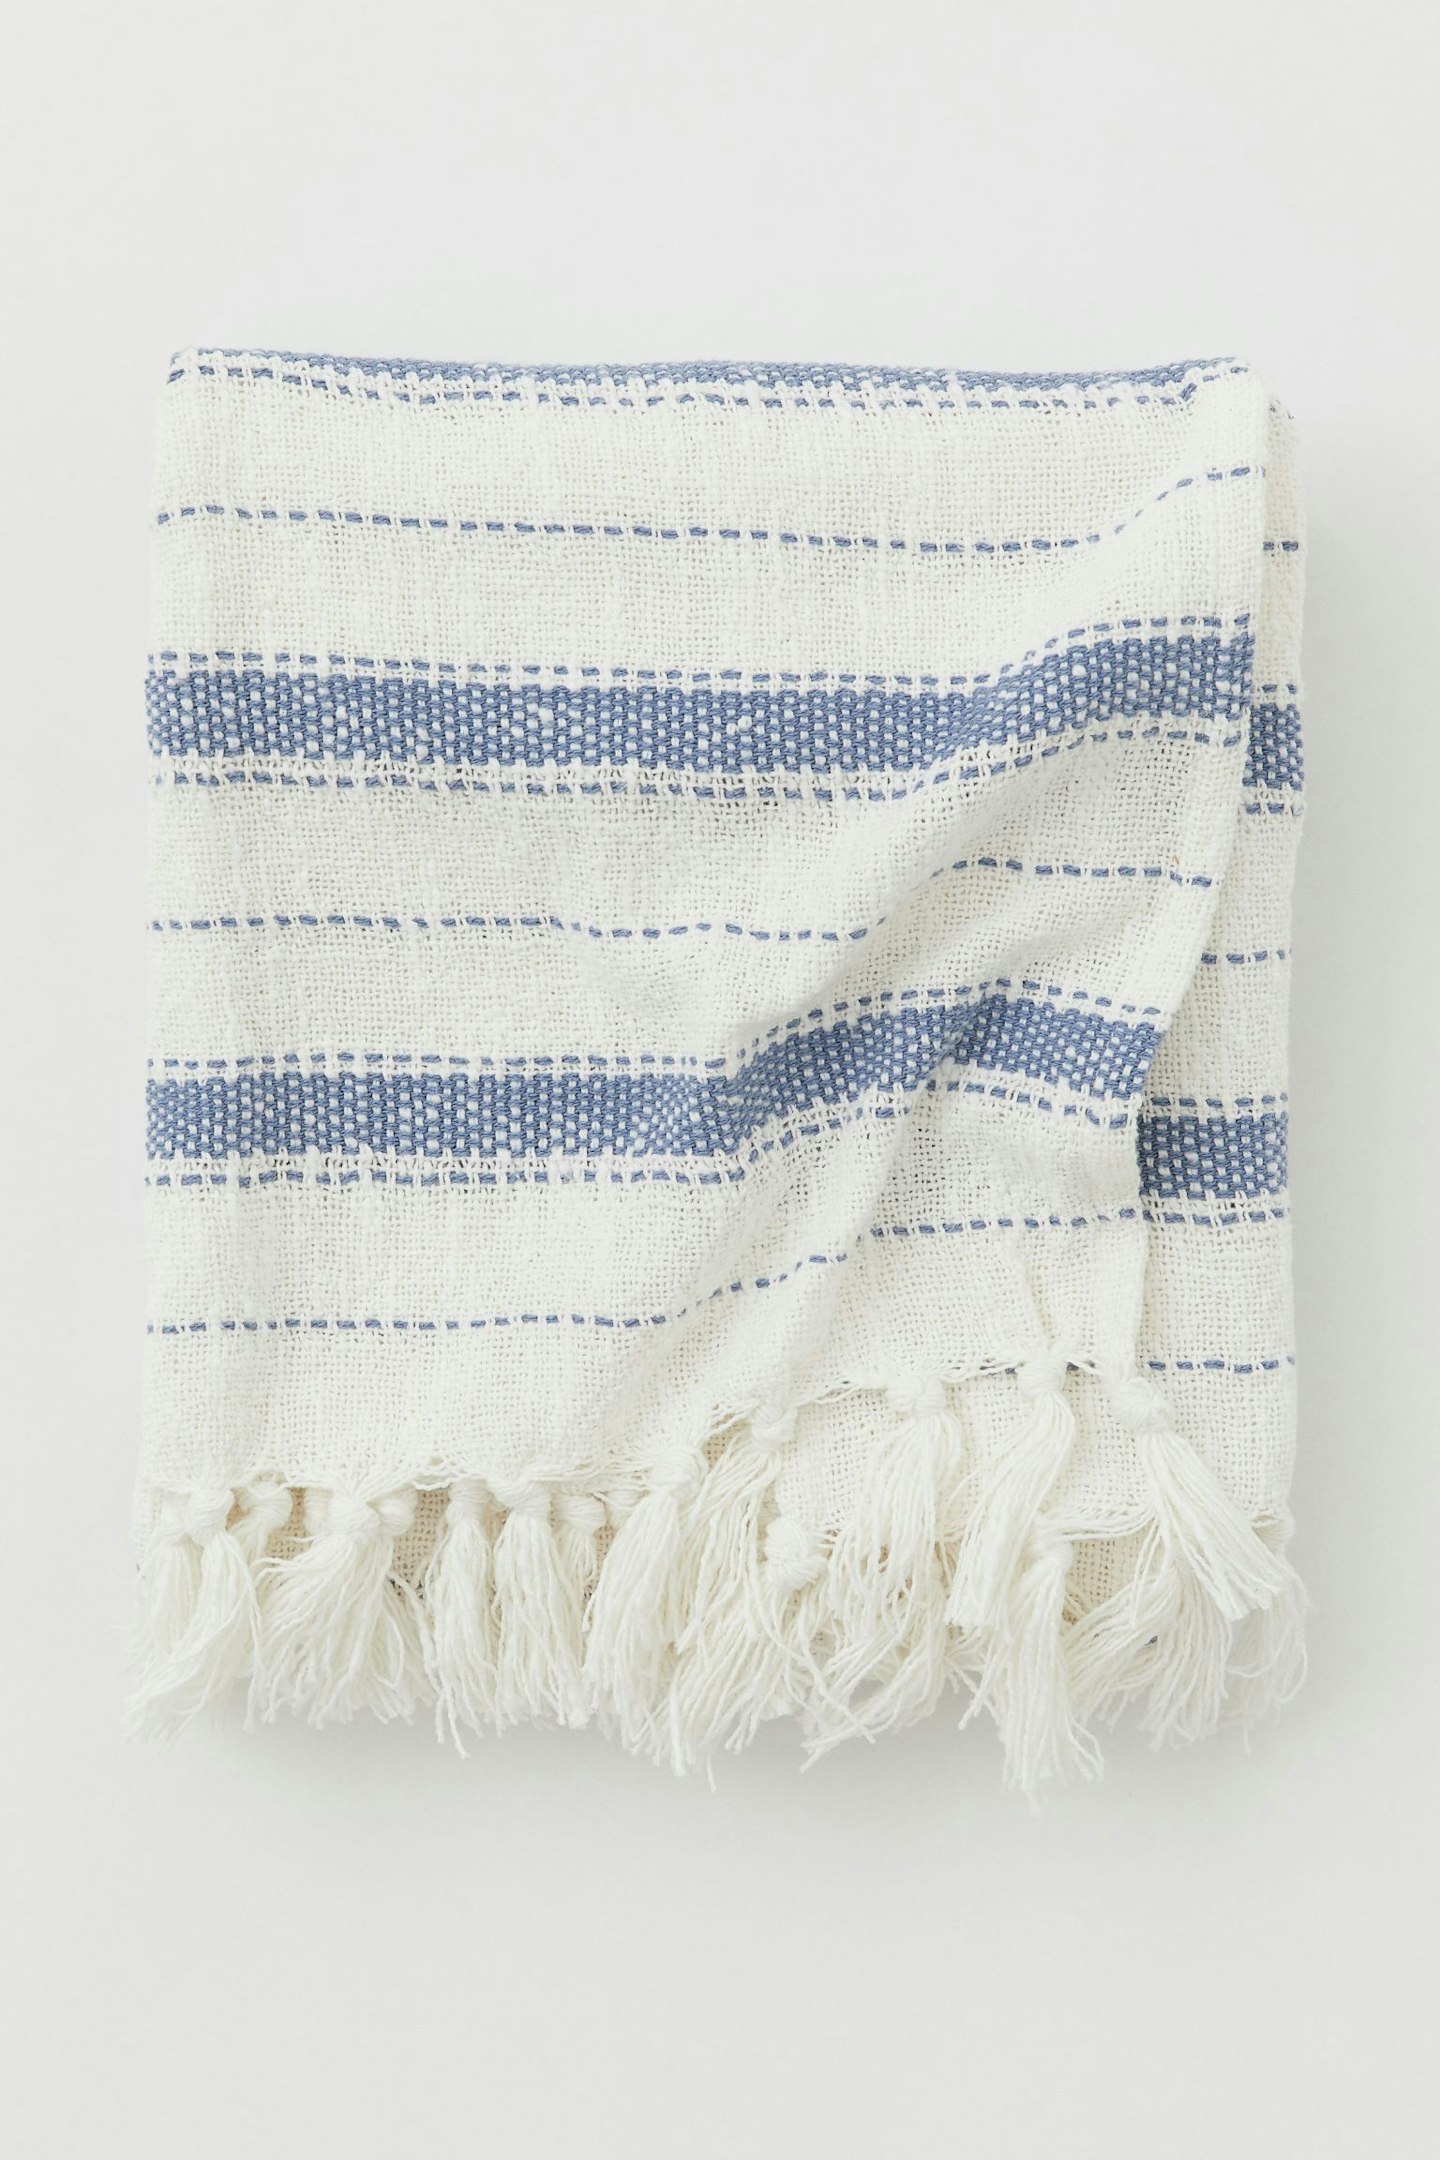 H&M, Striped Blanket, £29.99